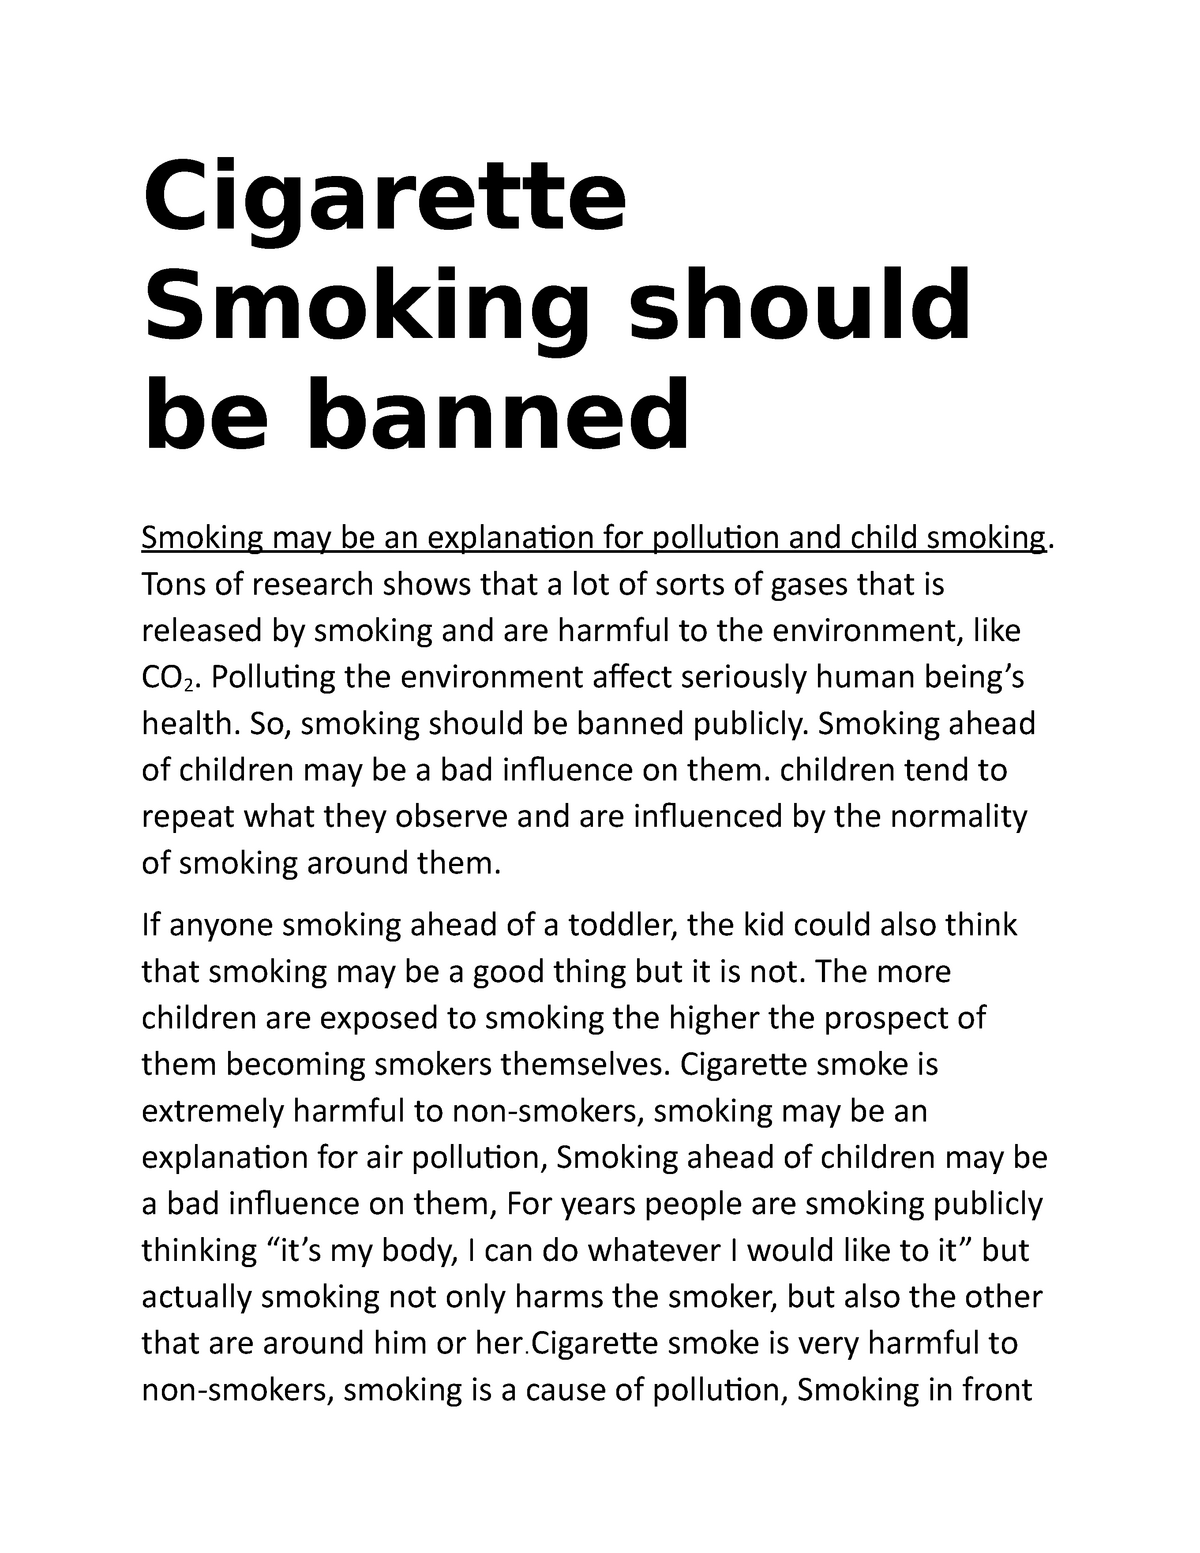 ban smoking in public places essay